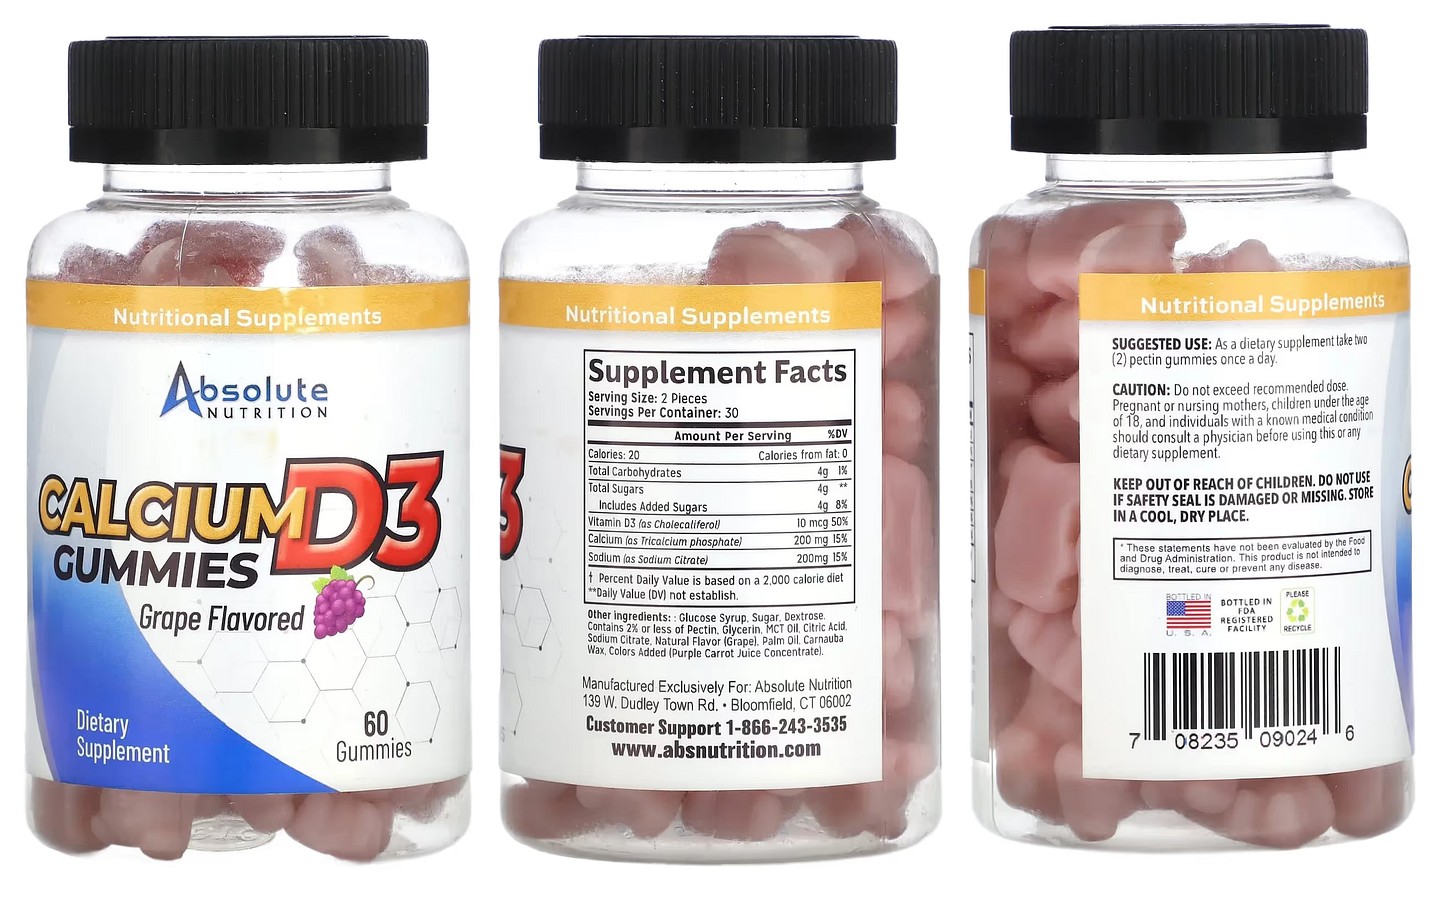 Absolute Nutrition, Calcium D3 Gummies packaging